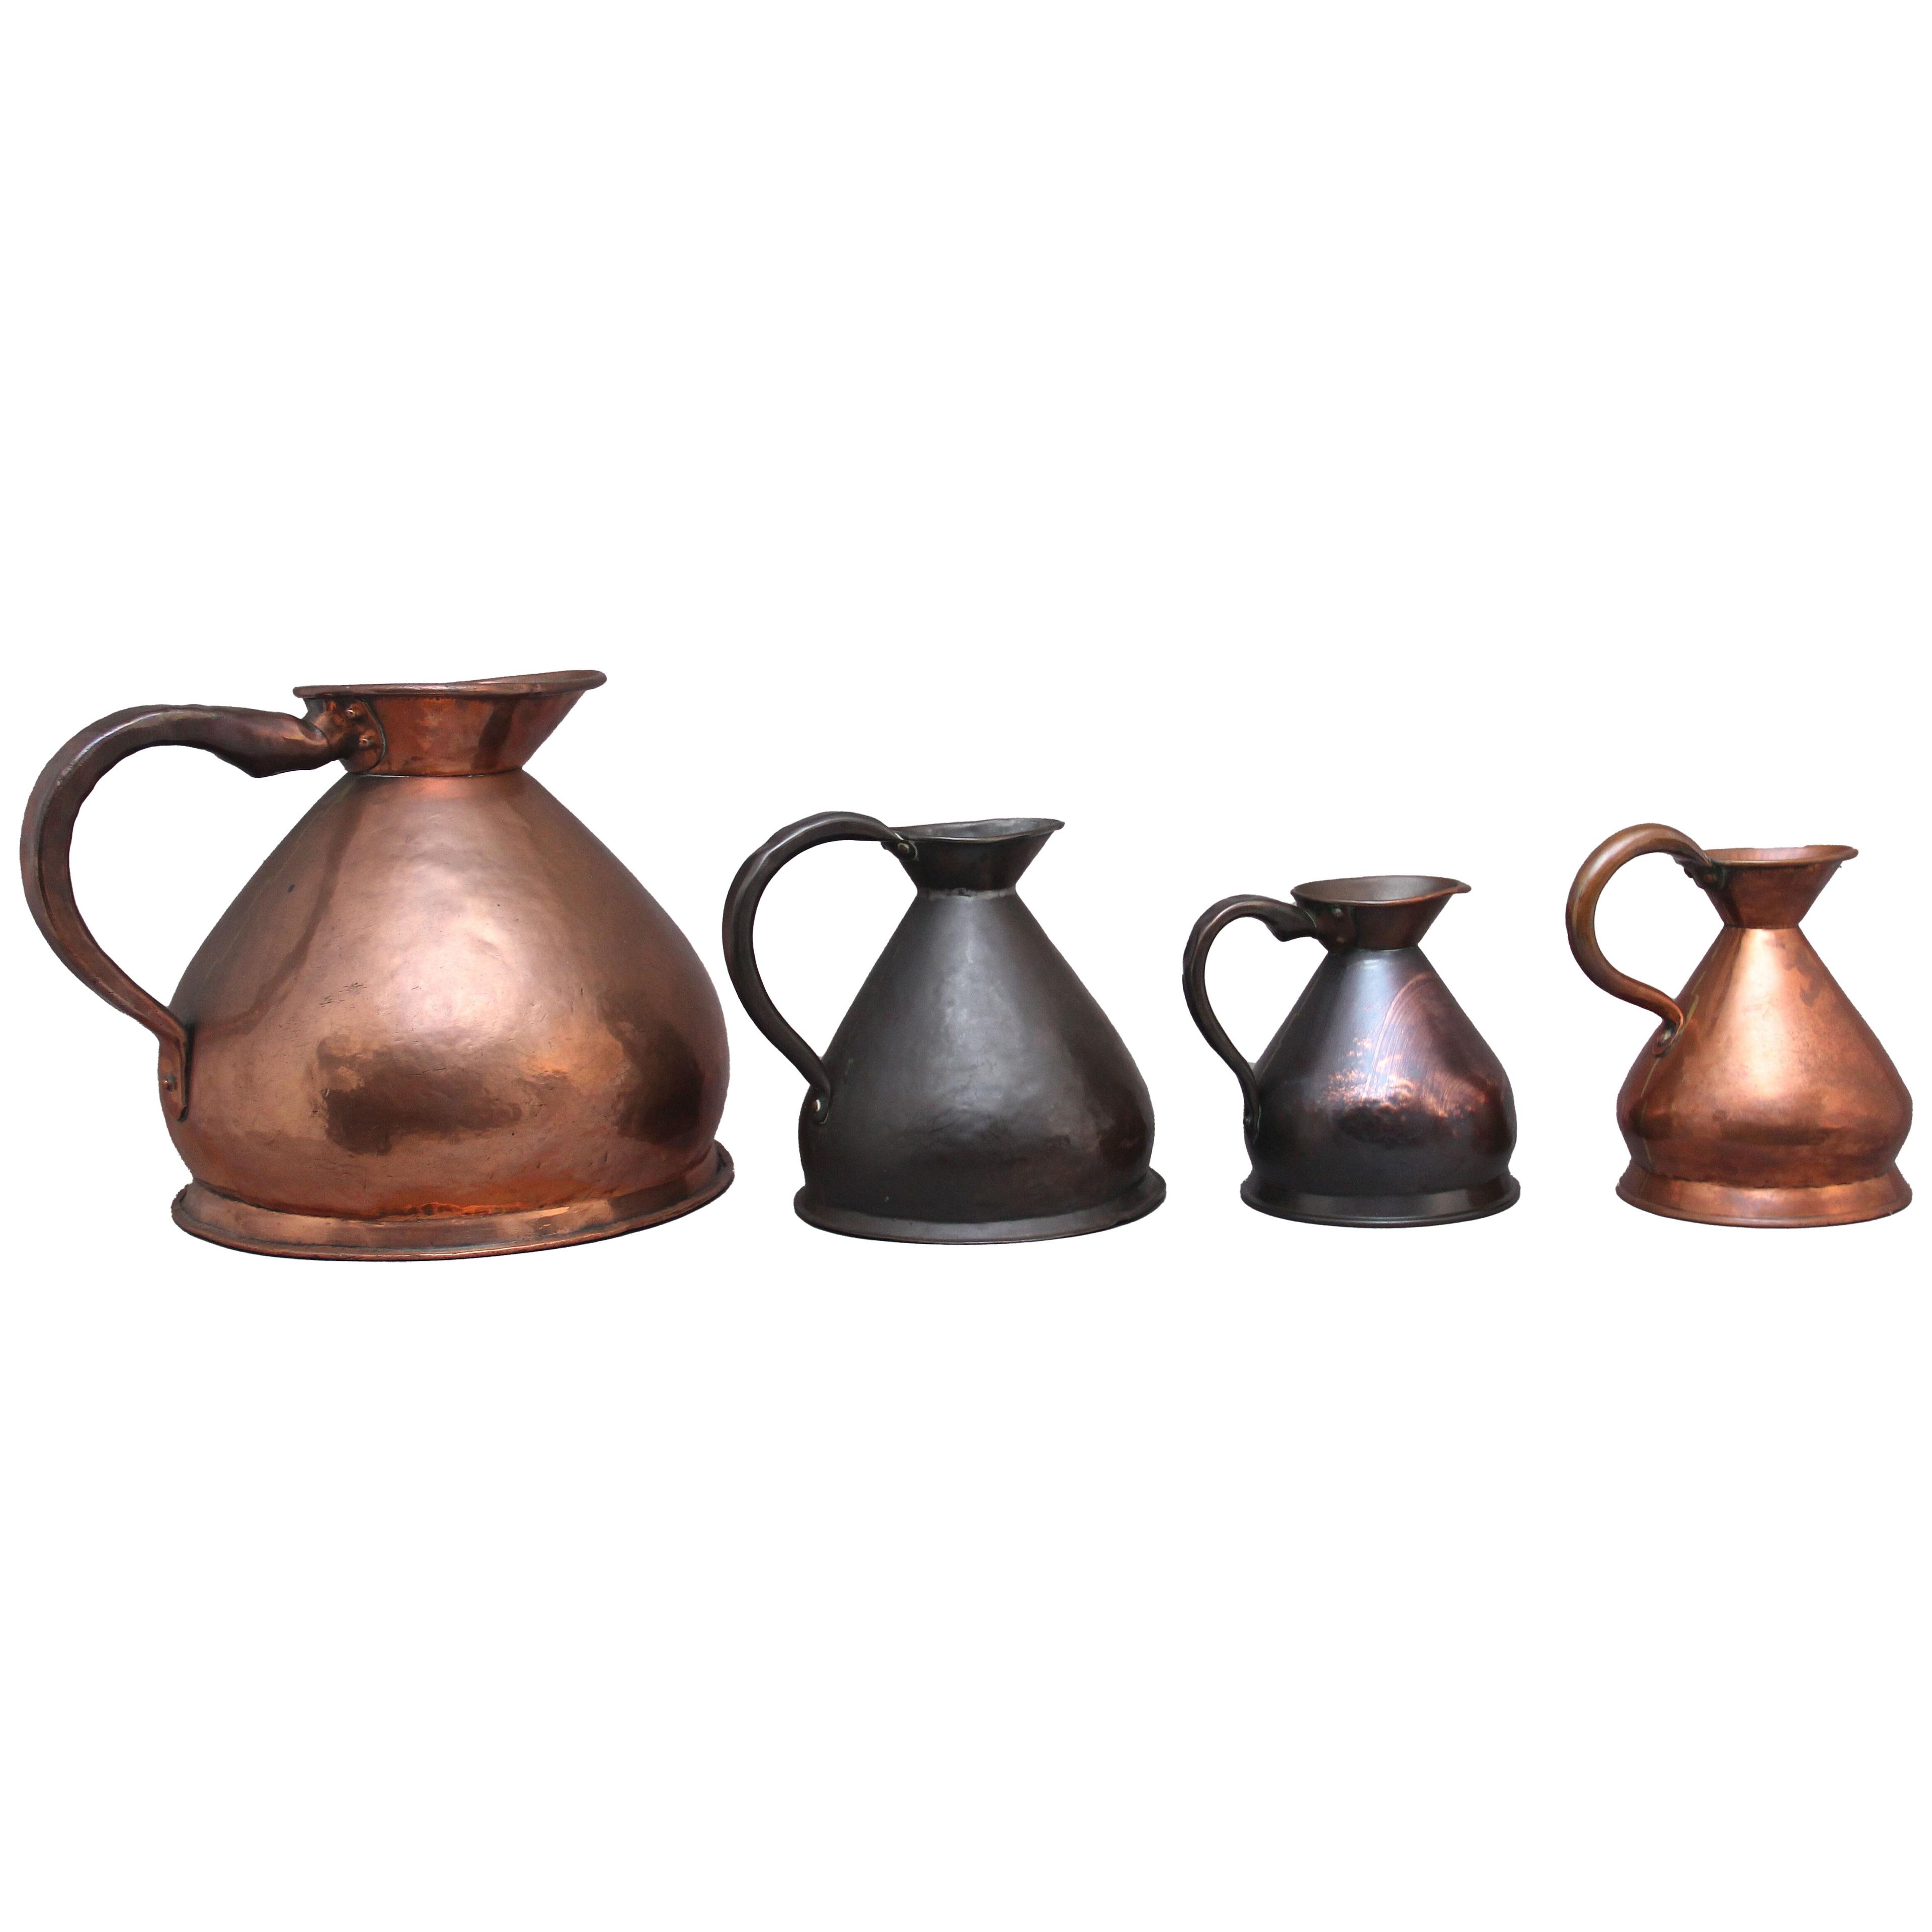 A set of four decorative 19th Century copper measuring jugs